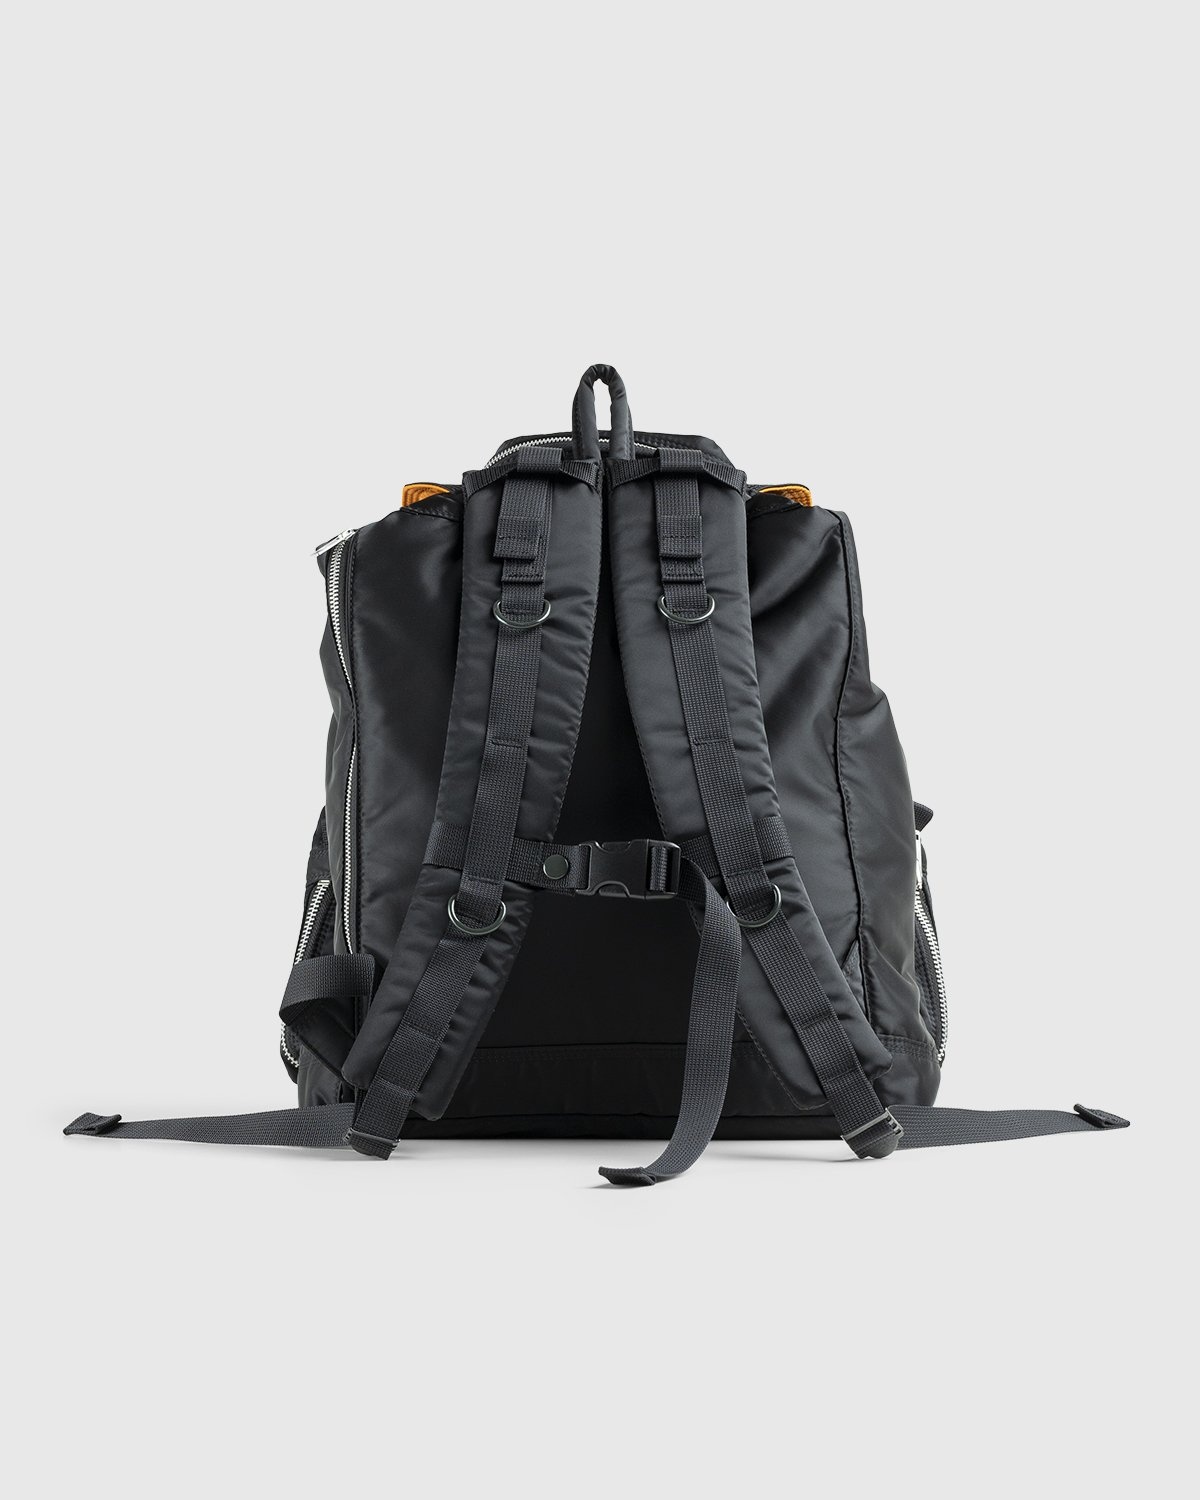 Porter-Yoshida & Co. – Rucksack Black - Backpacks - Black - Image 2